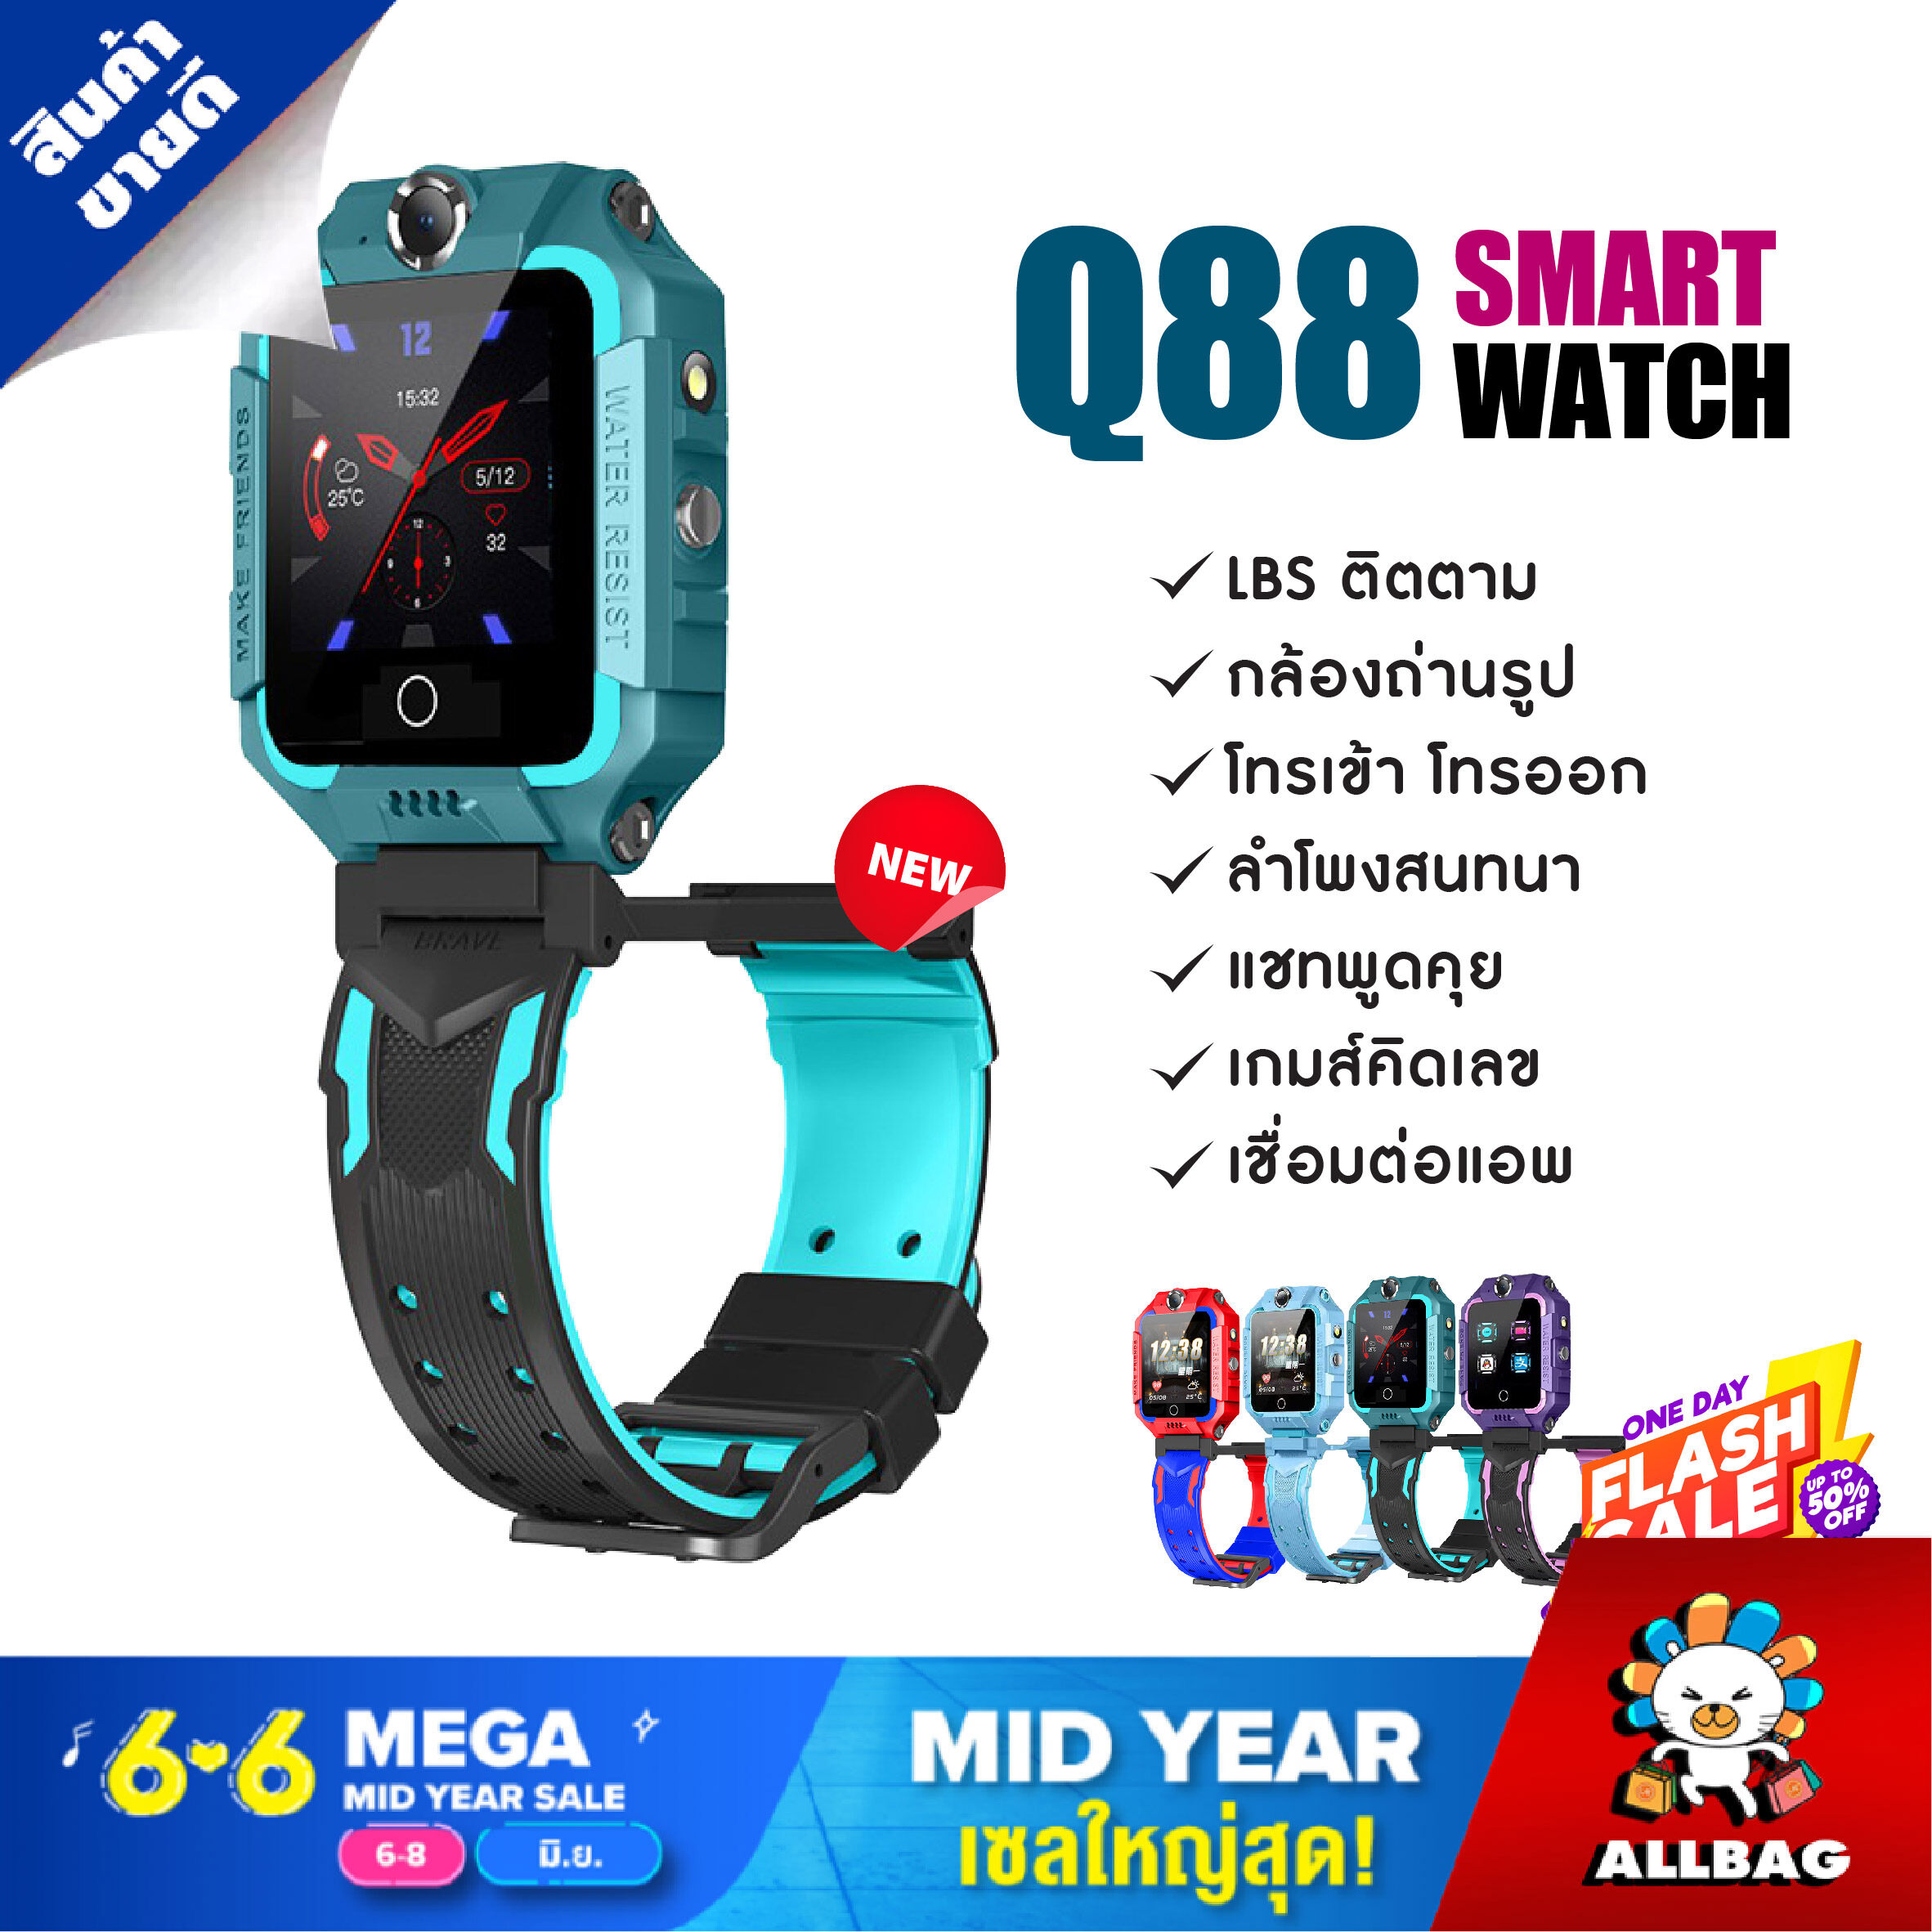 allbag ใหม่ หมุนหน้าจอได้ ยกได้ Q88 Smart Watch นาฬิกาข้อมือเด็ก สมาร์ทวอทช์ อัจฉริยะ GPS ติดตามตำแหน่ง Anti Lost Monitor ส่งไว 1-3 วัน พร้อมรับประกันสินค้า